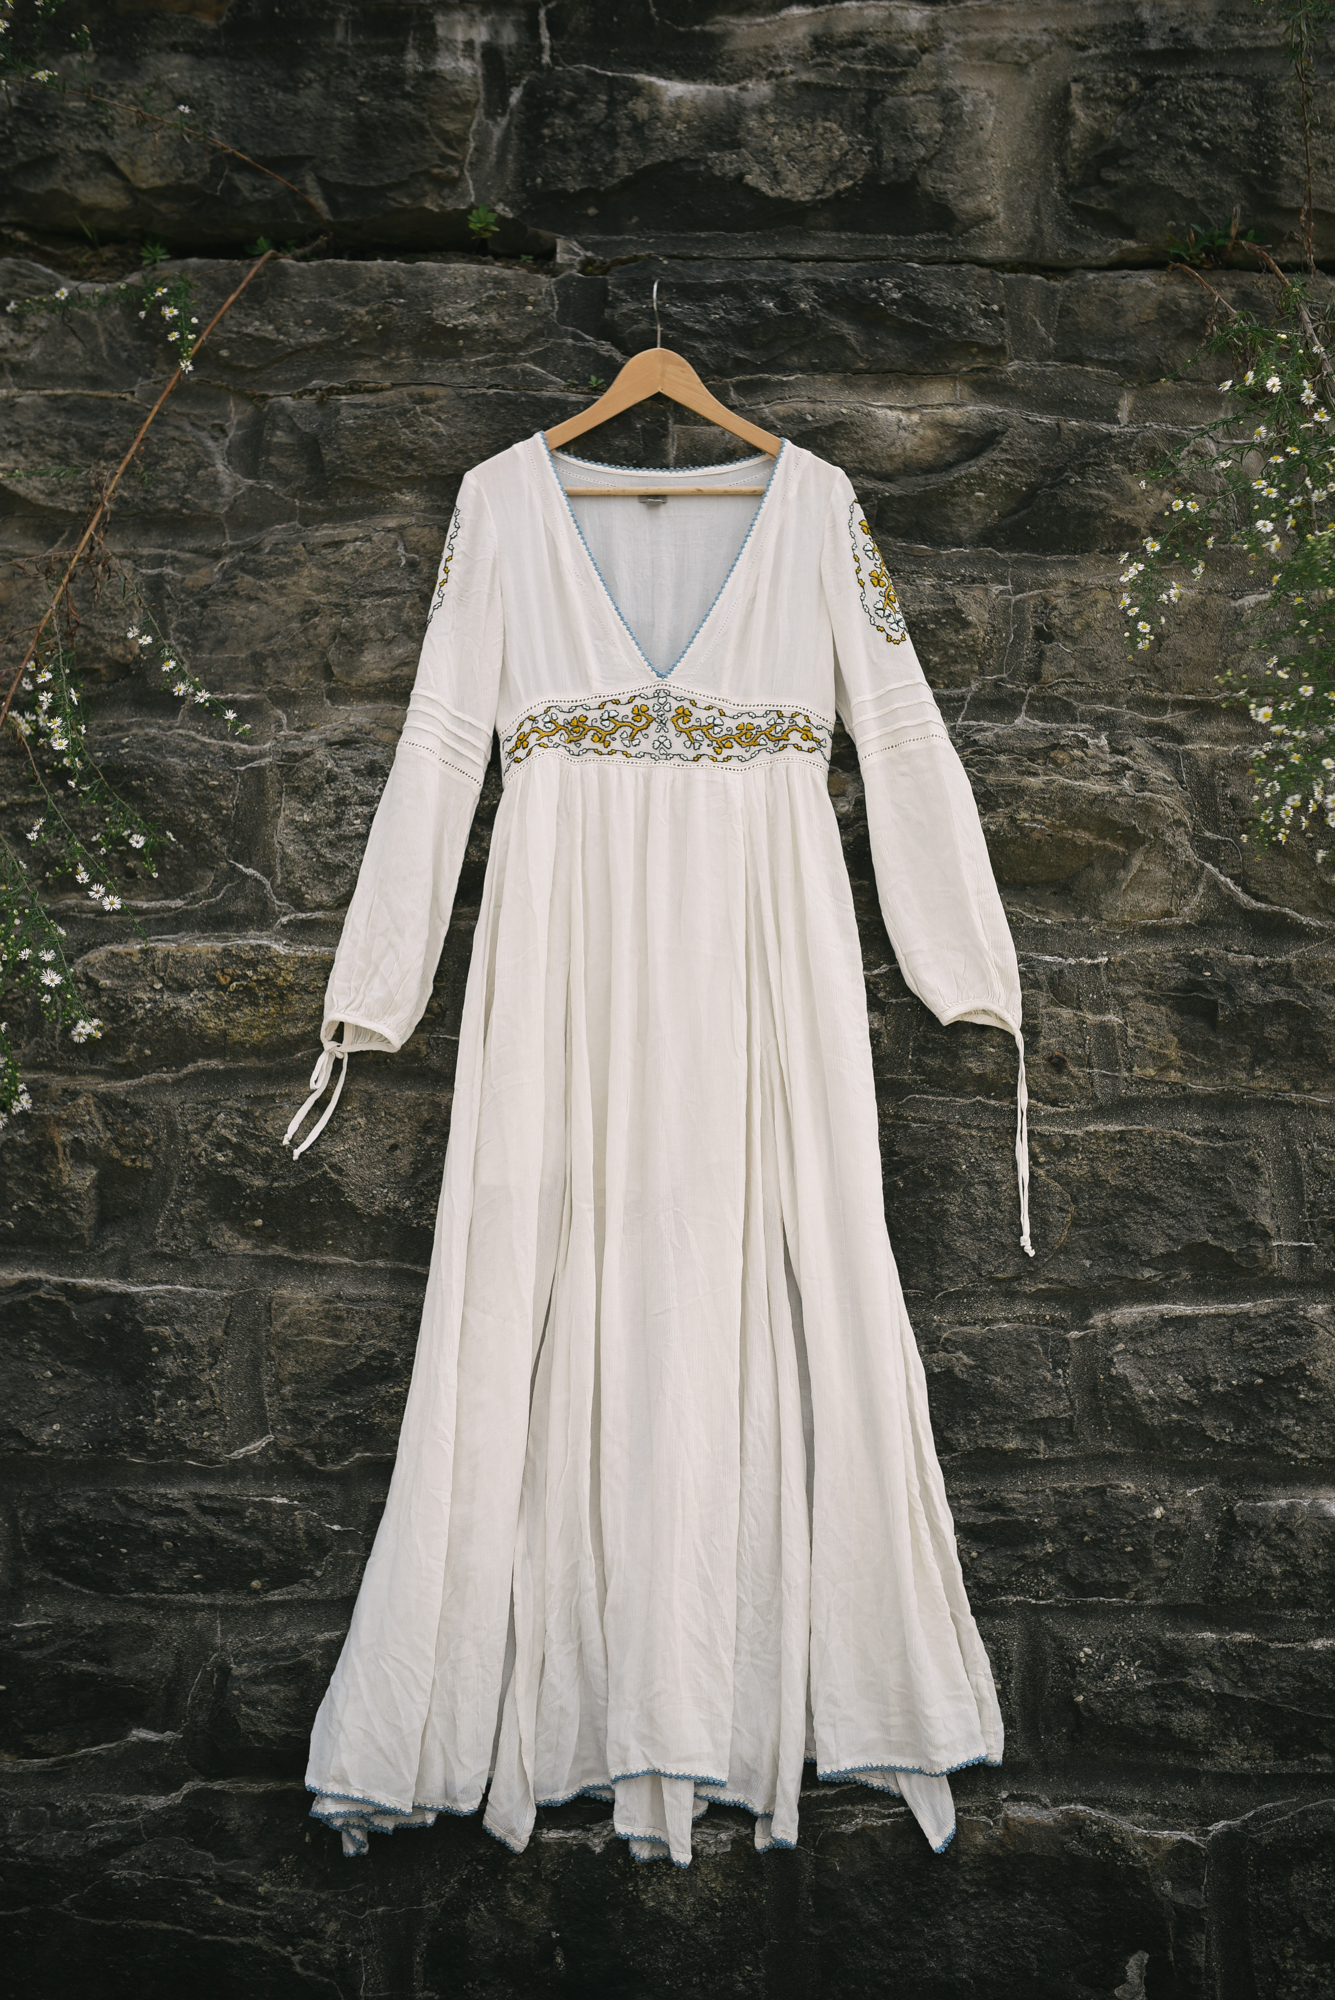  Mountain Wedding, Outdoors, Rustic, West Virginia, Maryland Wedding Photographer, DIY, Casual, Embroidered White Wedding Dress 